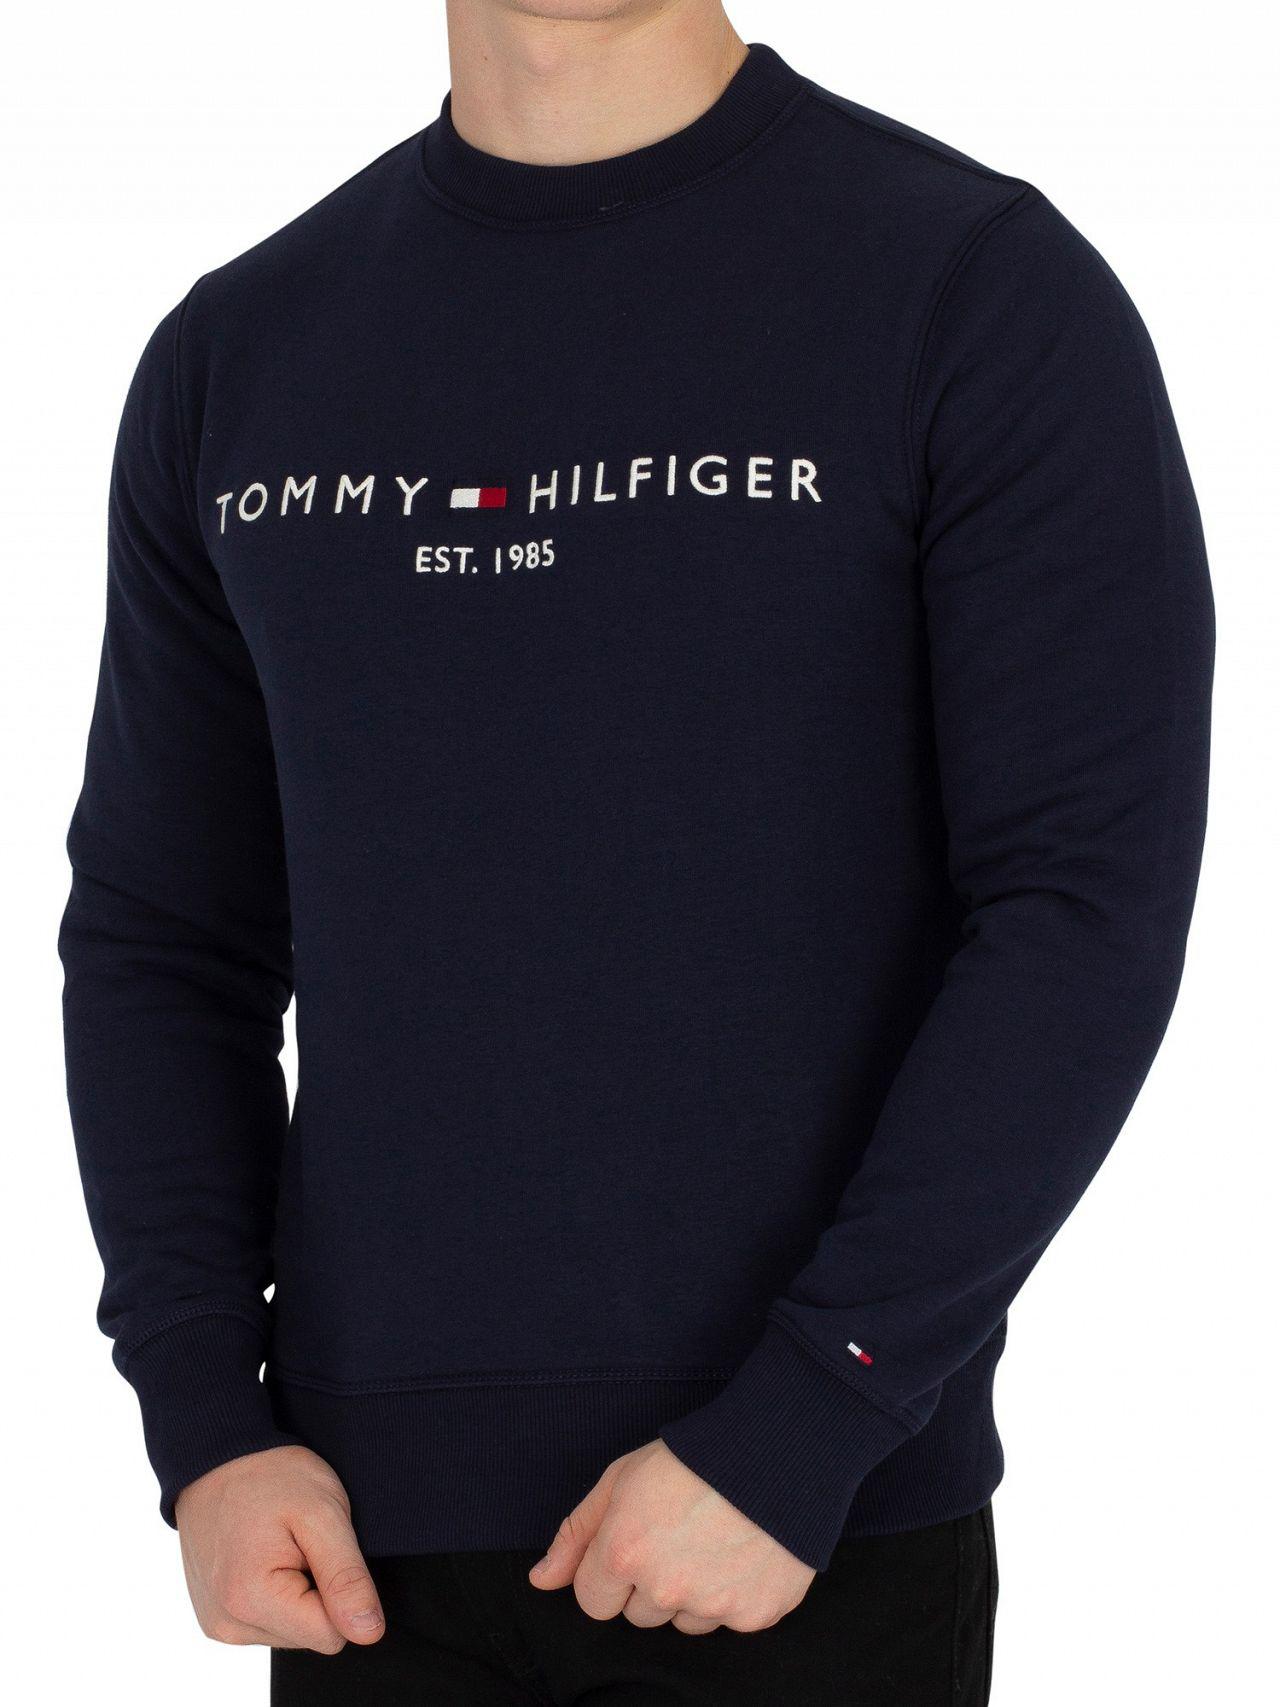 tommy hilfiger black sweatshirt mens